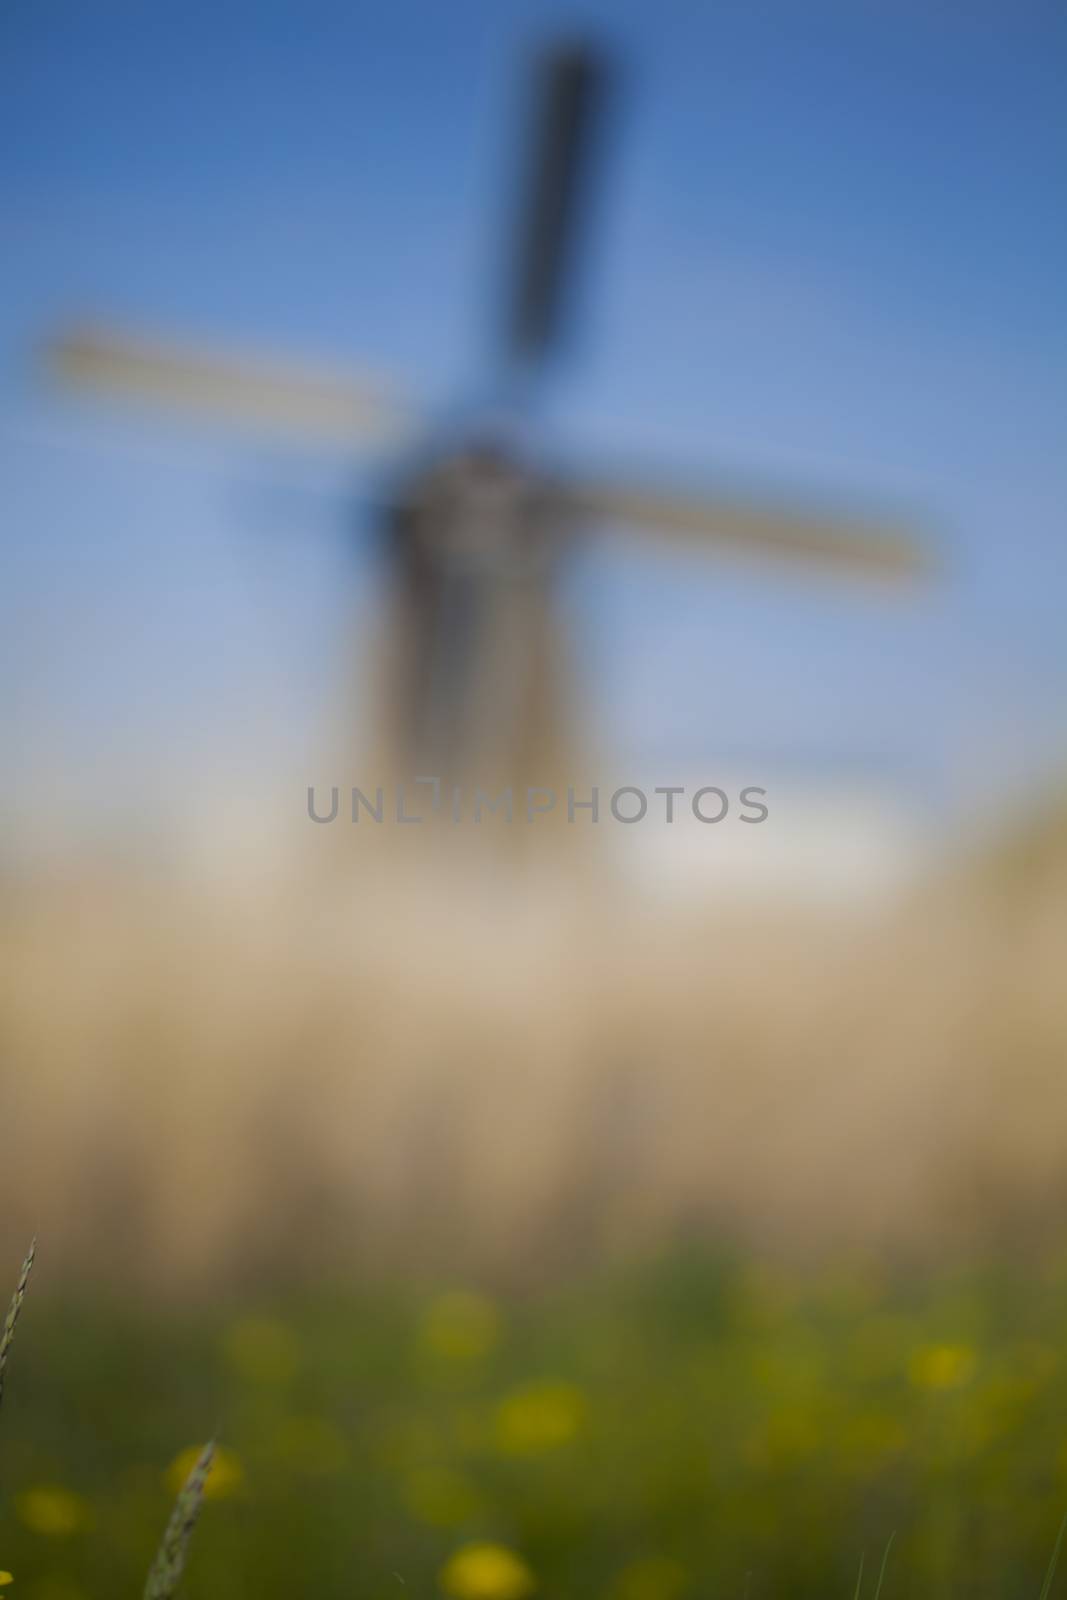 Windmill, Kinderdijk in netherlands by JanPietruszka